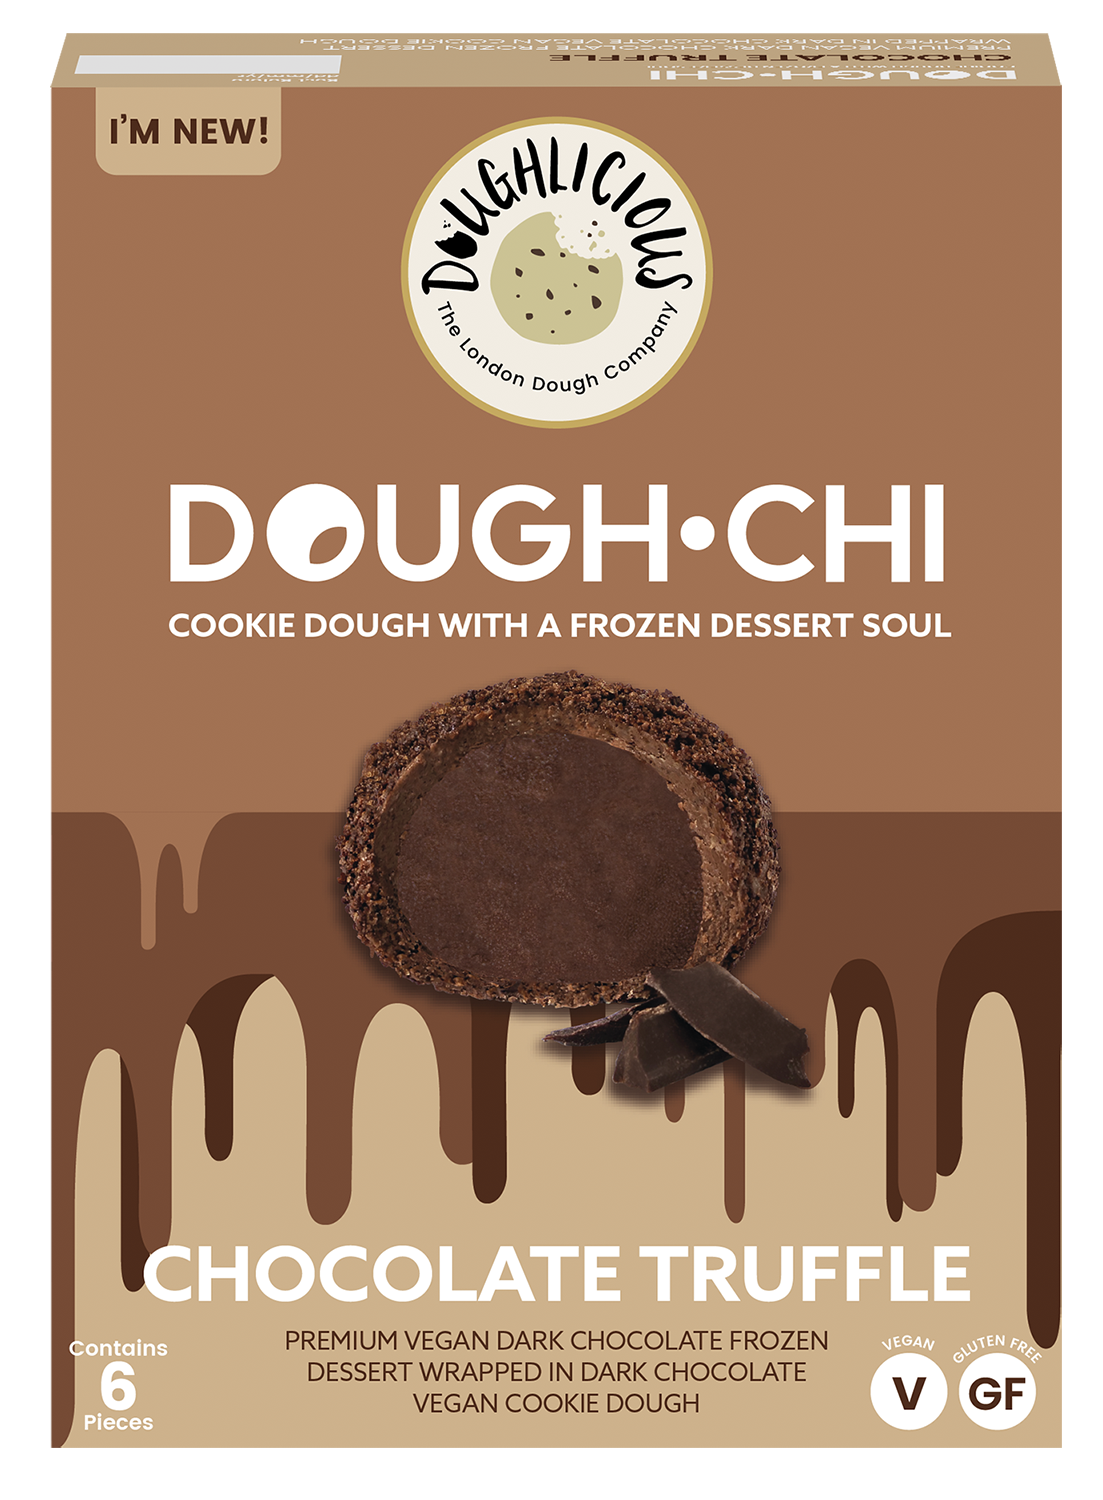 Chocolate Truffle Dough•Chi